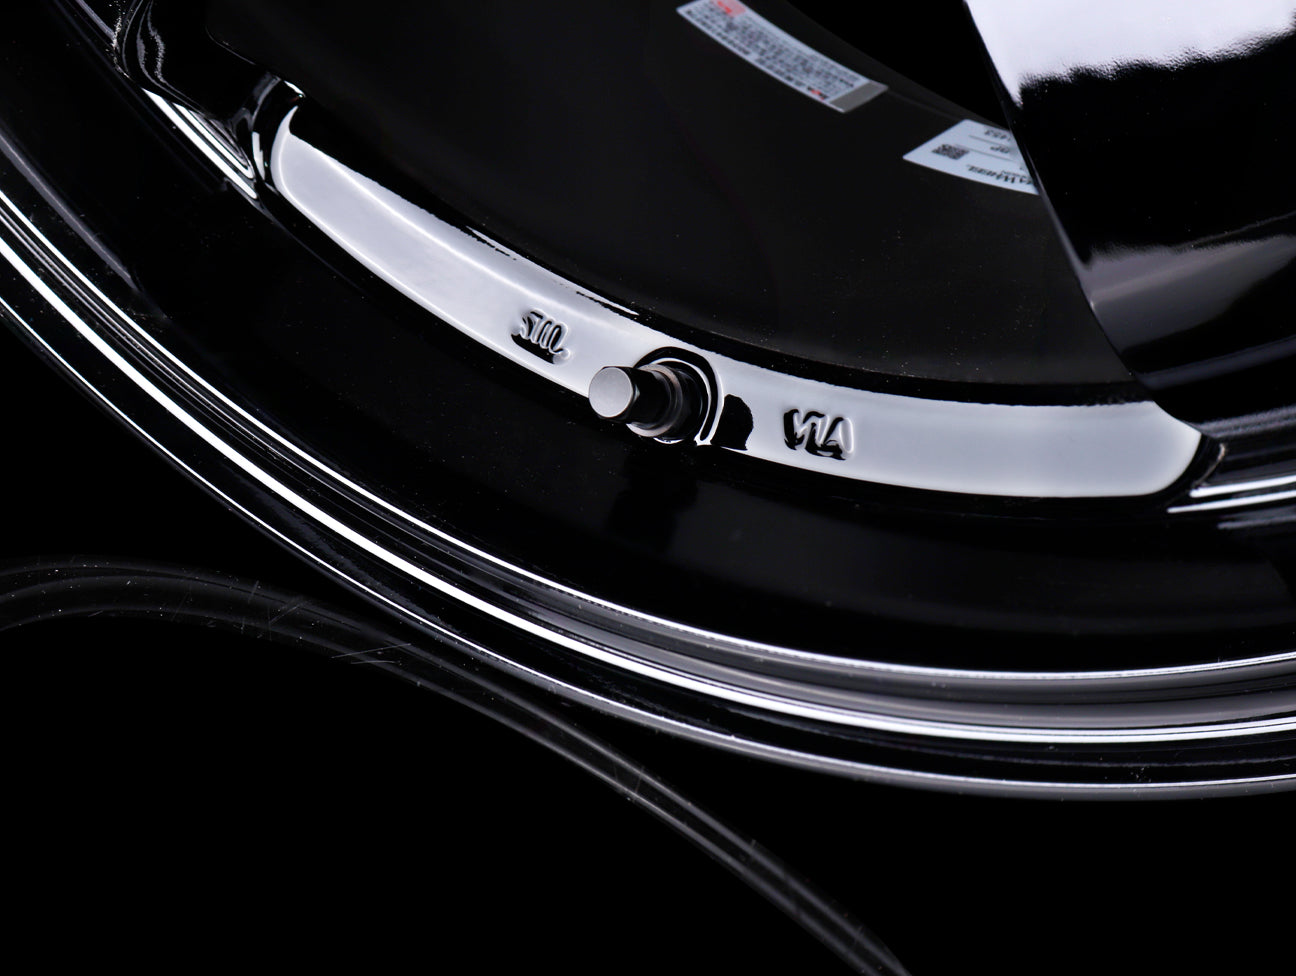 Advan Racing GT Wheels - Racing Gloss Black / 20x9.5 / 5x114 / +28